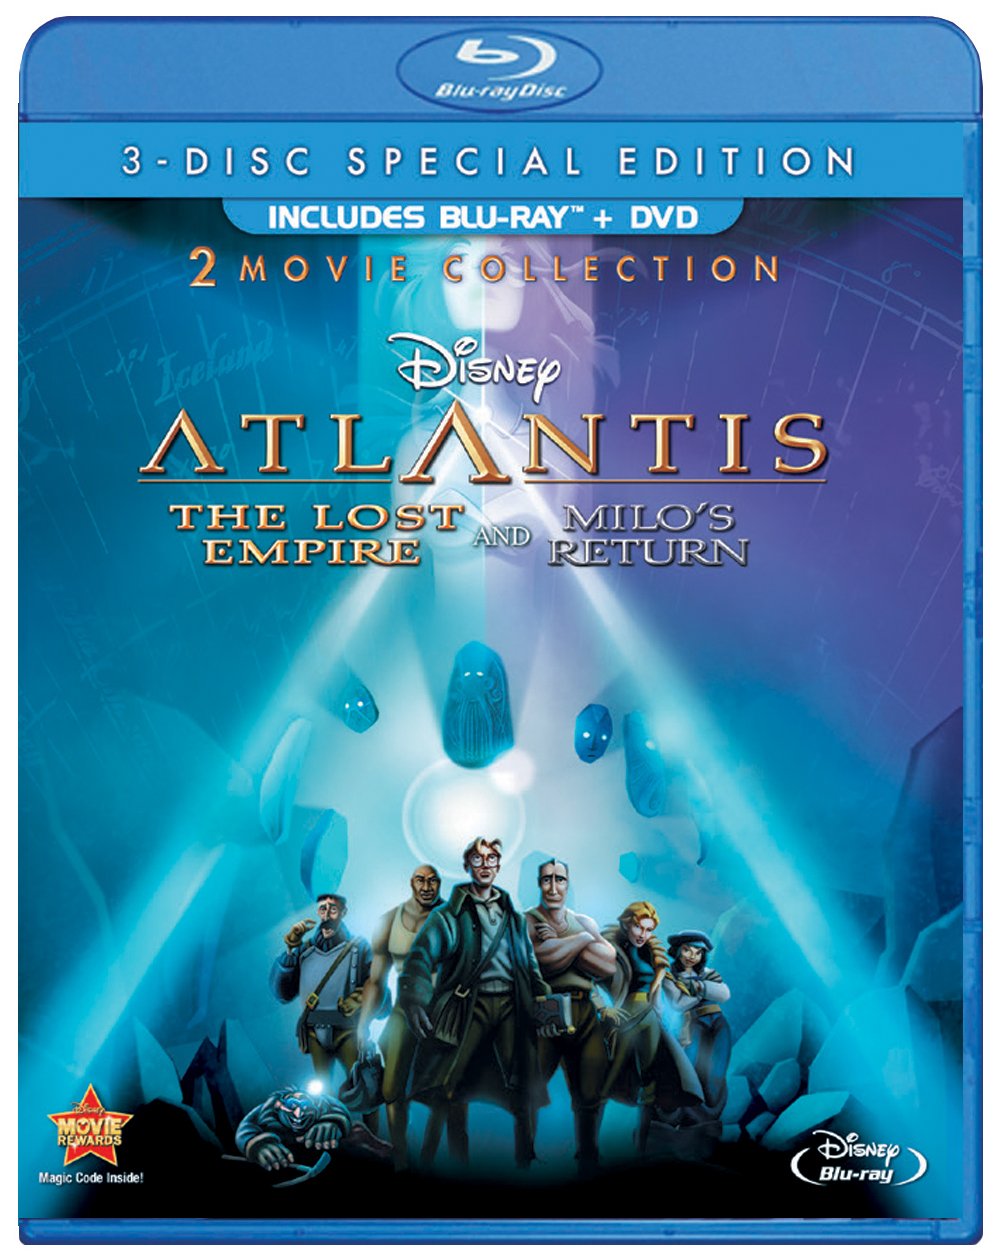 Atlantis: The Lost Empire and Milo's Return (Blu-ray + DVD)